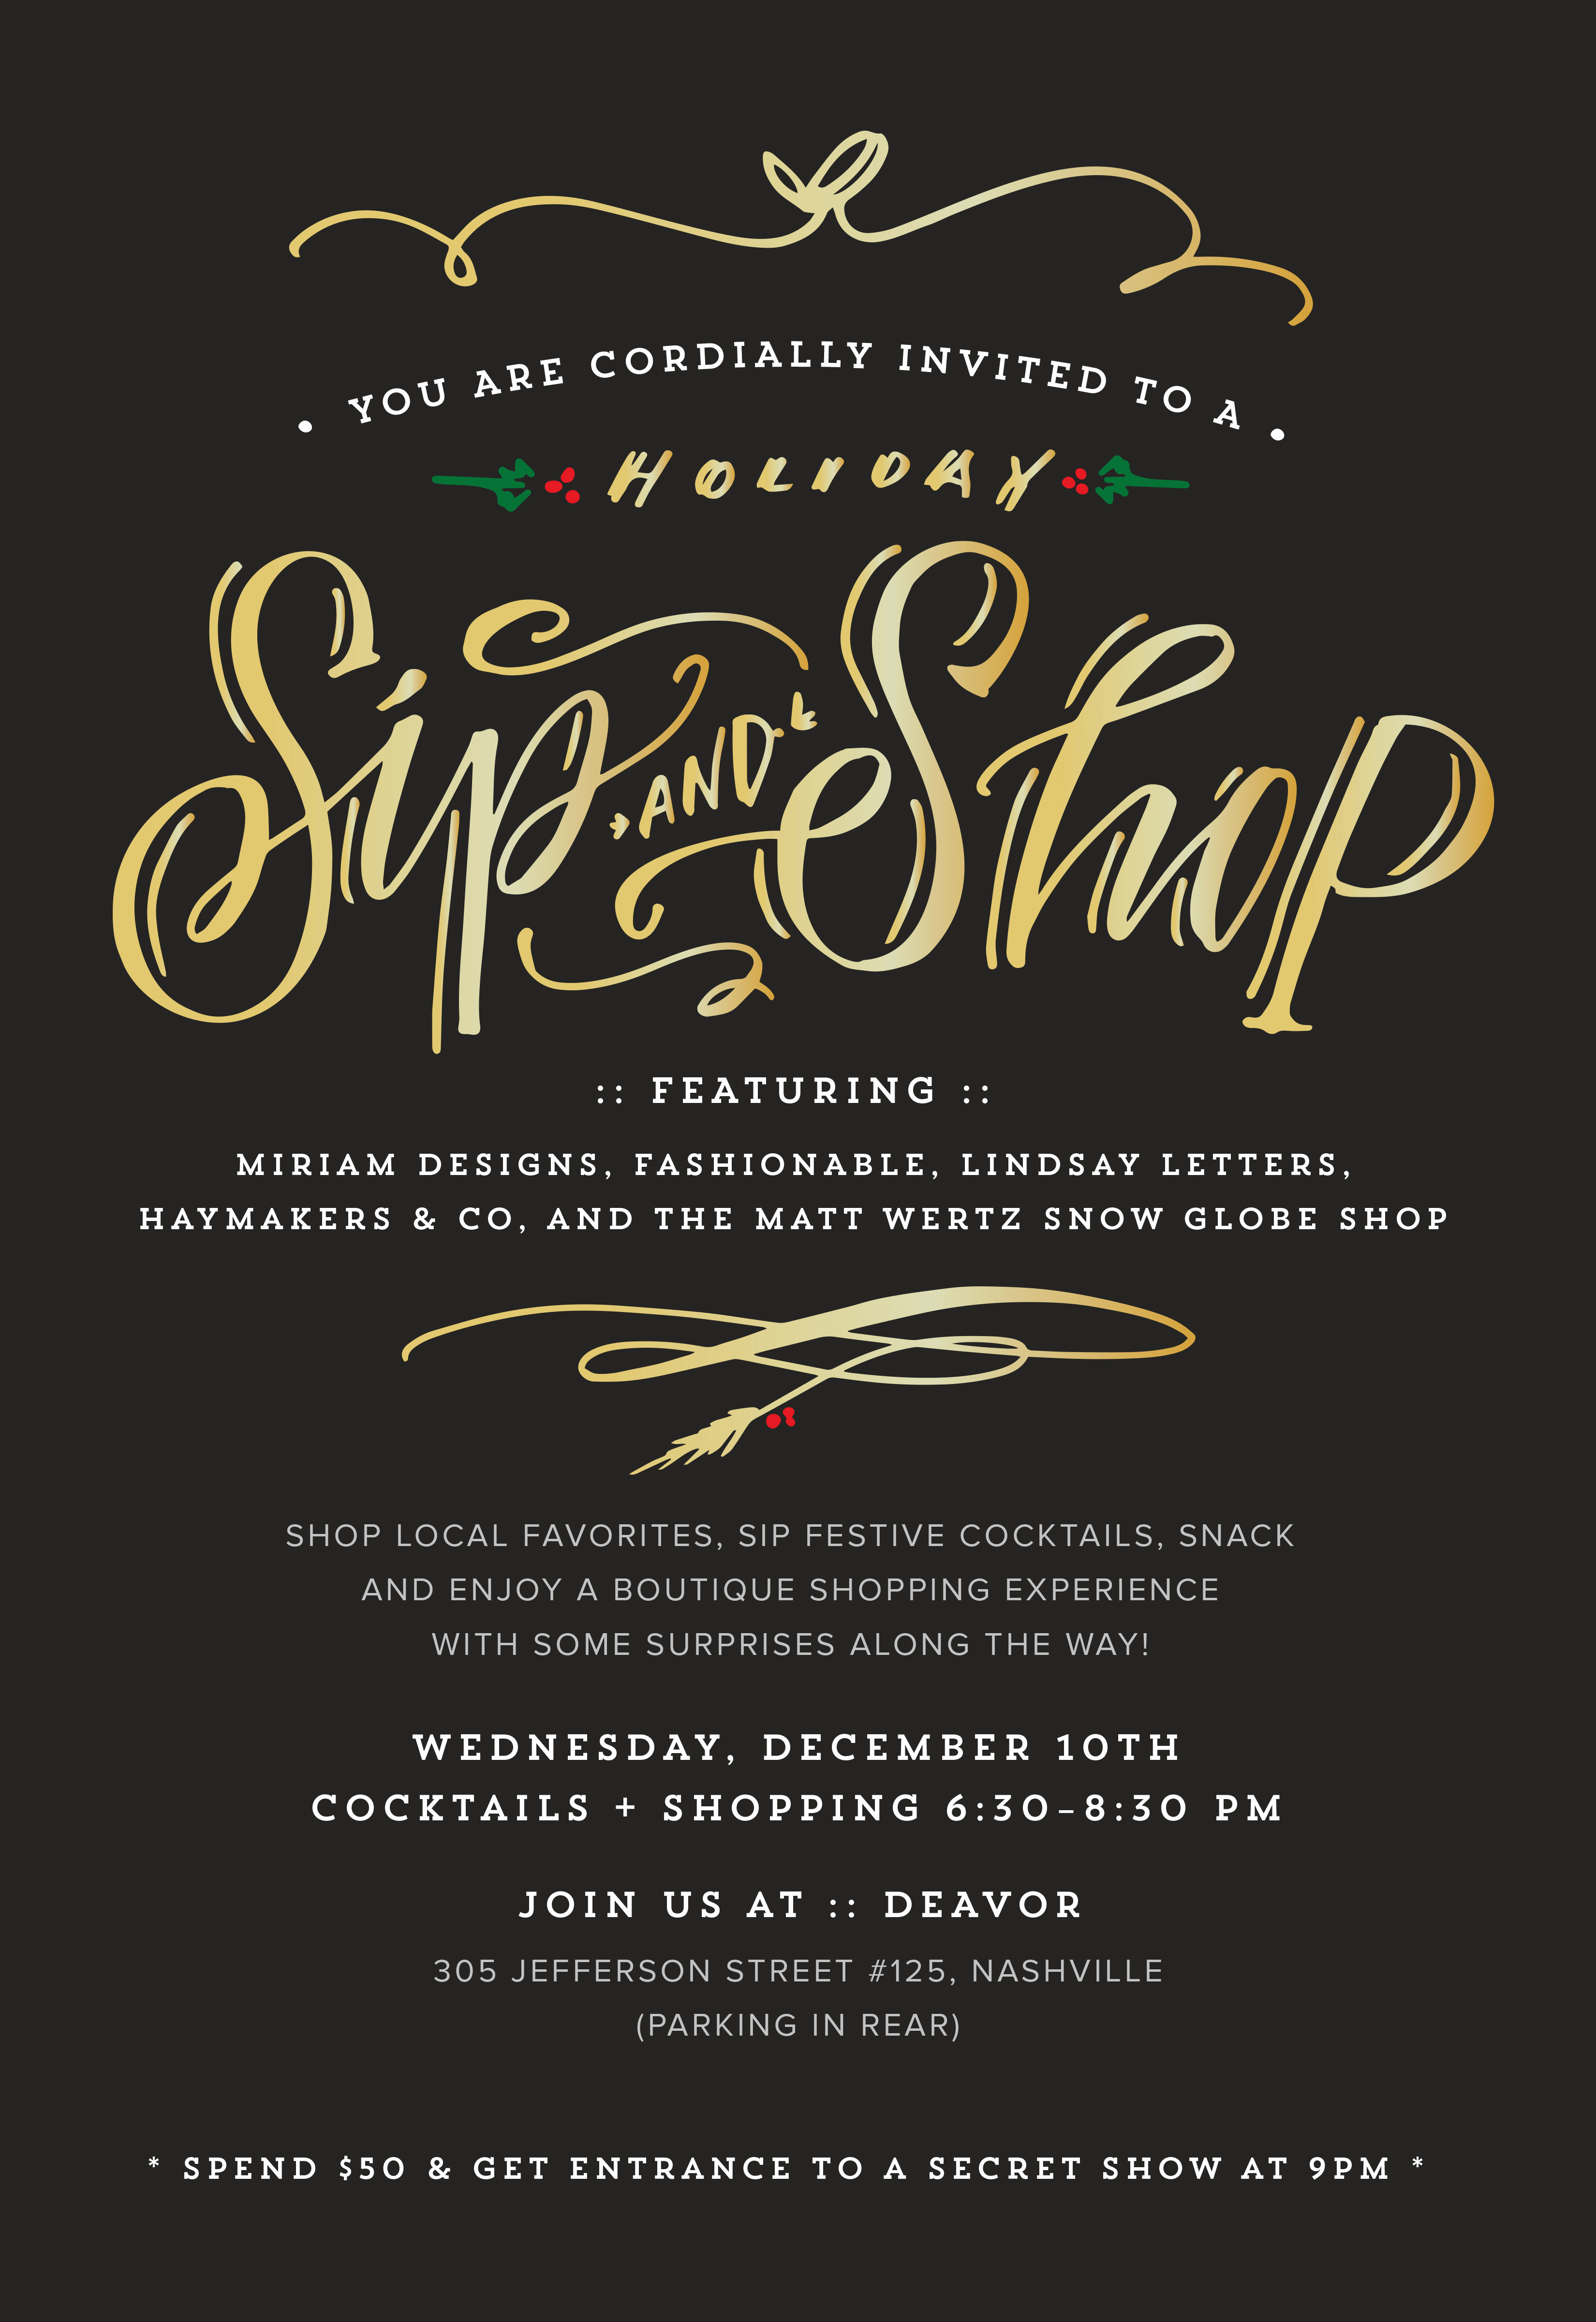 Sip and Shop Invitation Awesome Nashville Sip’n’shop tonight Lindsay Letters Blogs